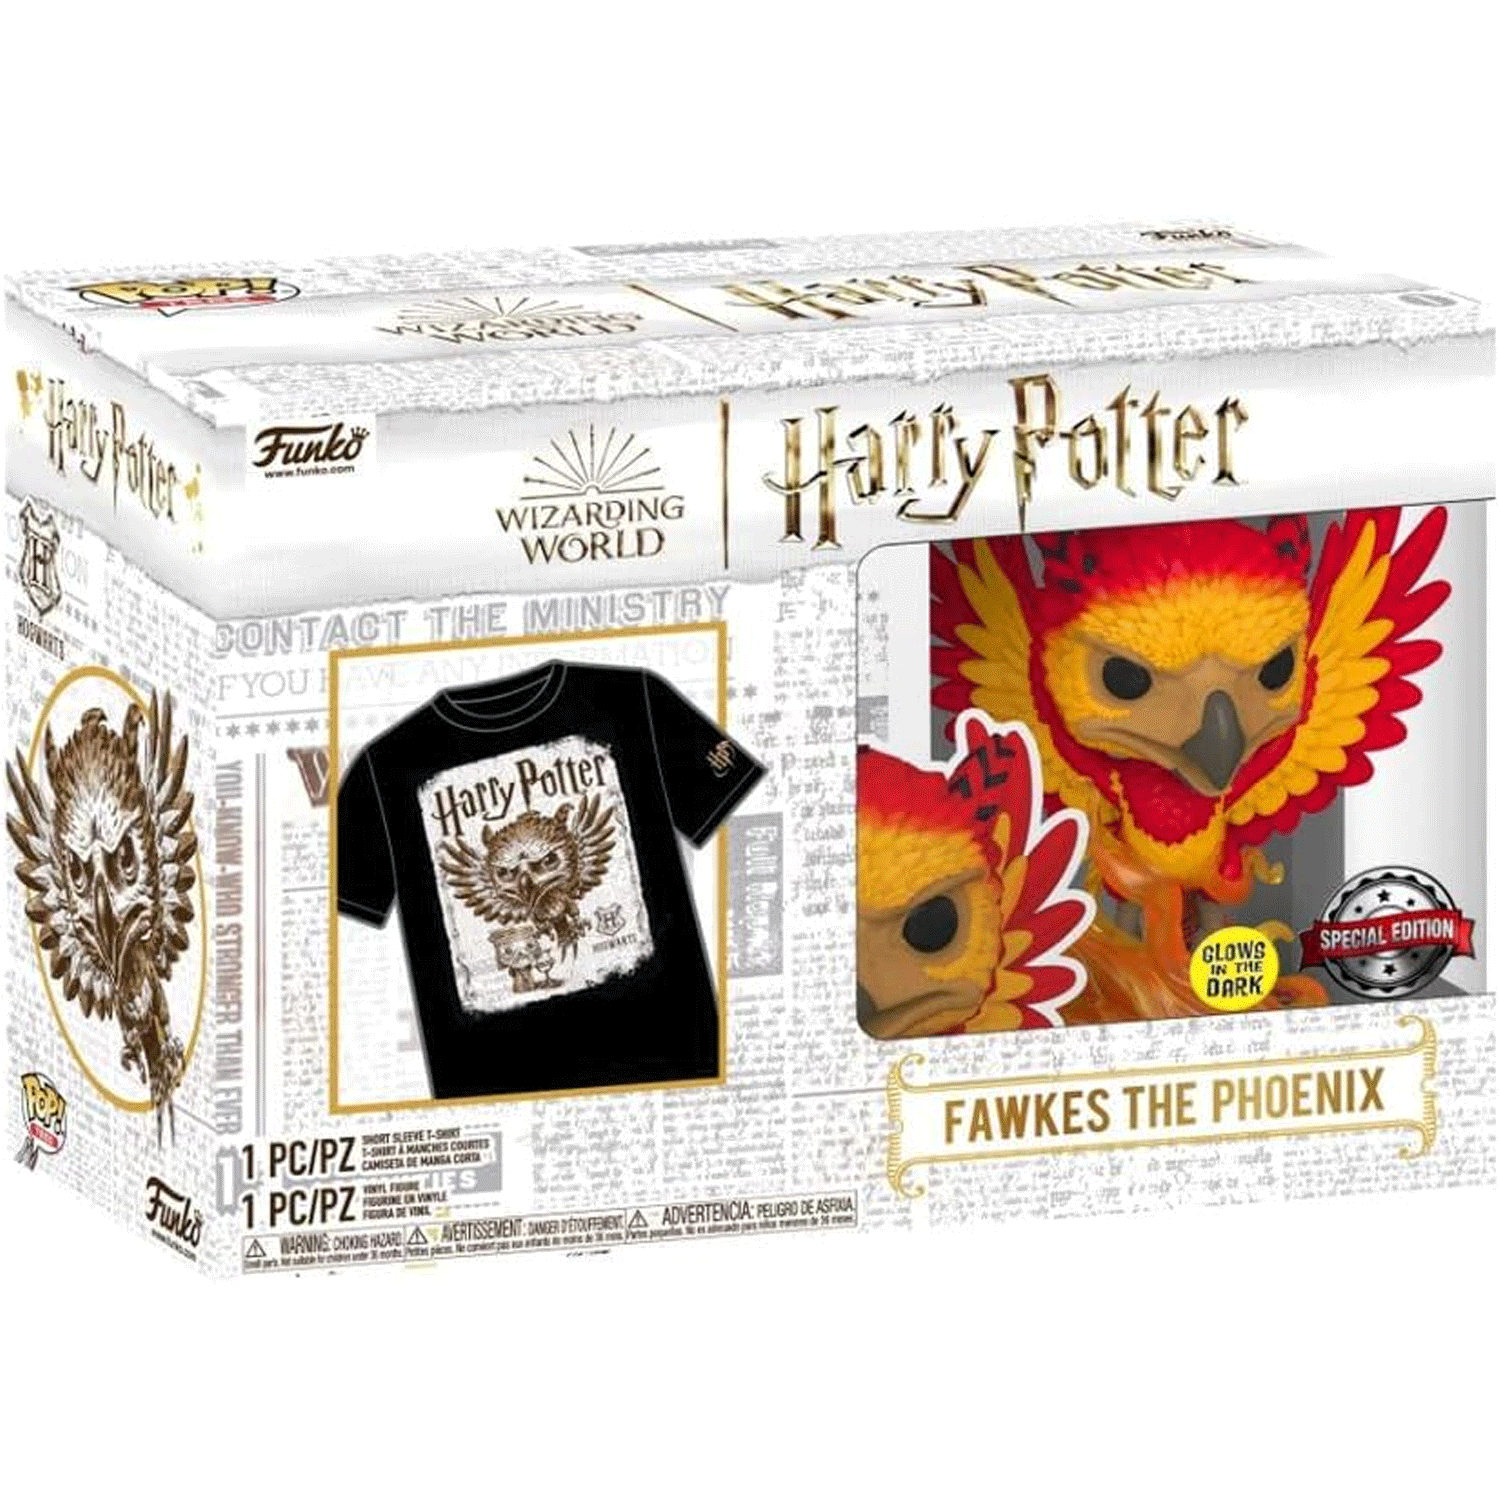 Harry Potter Fawkes the Phoenix Pop! Vinyl and Tee Set